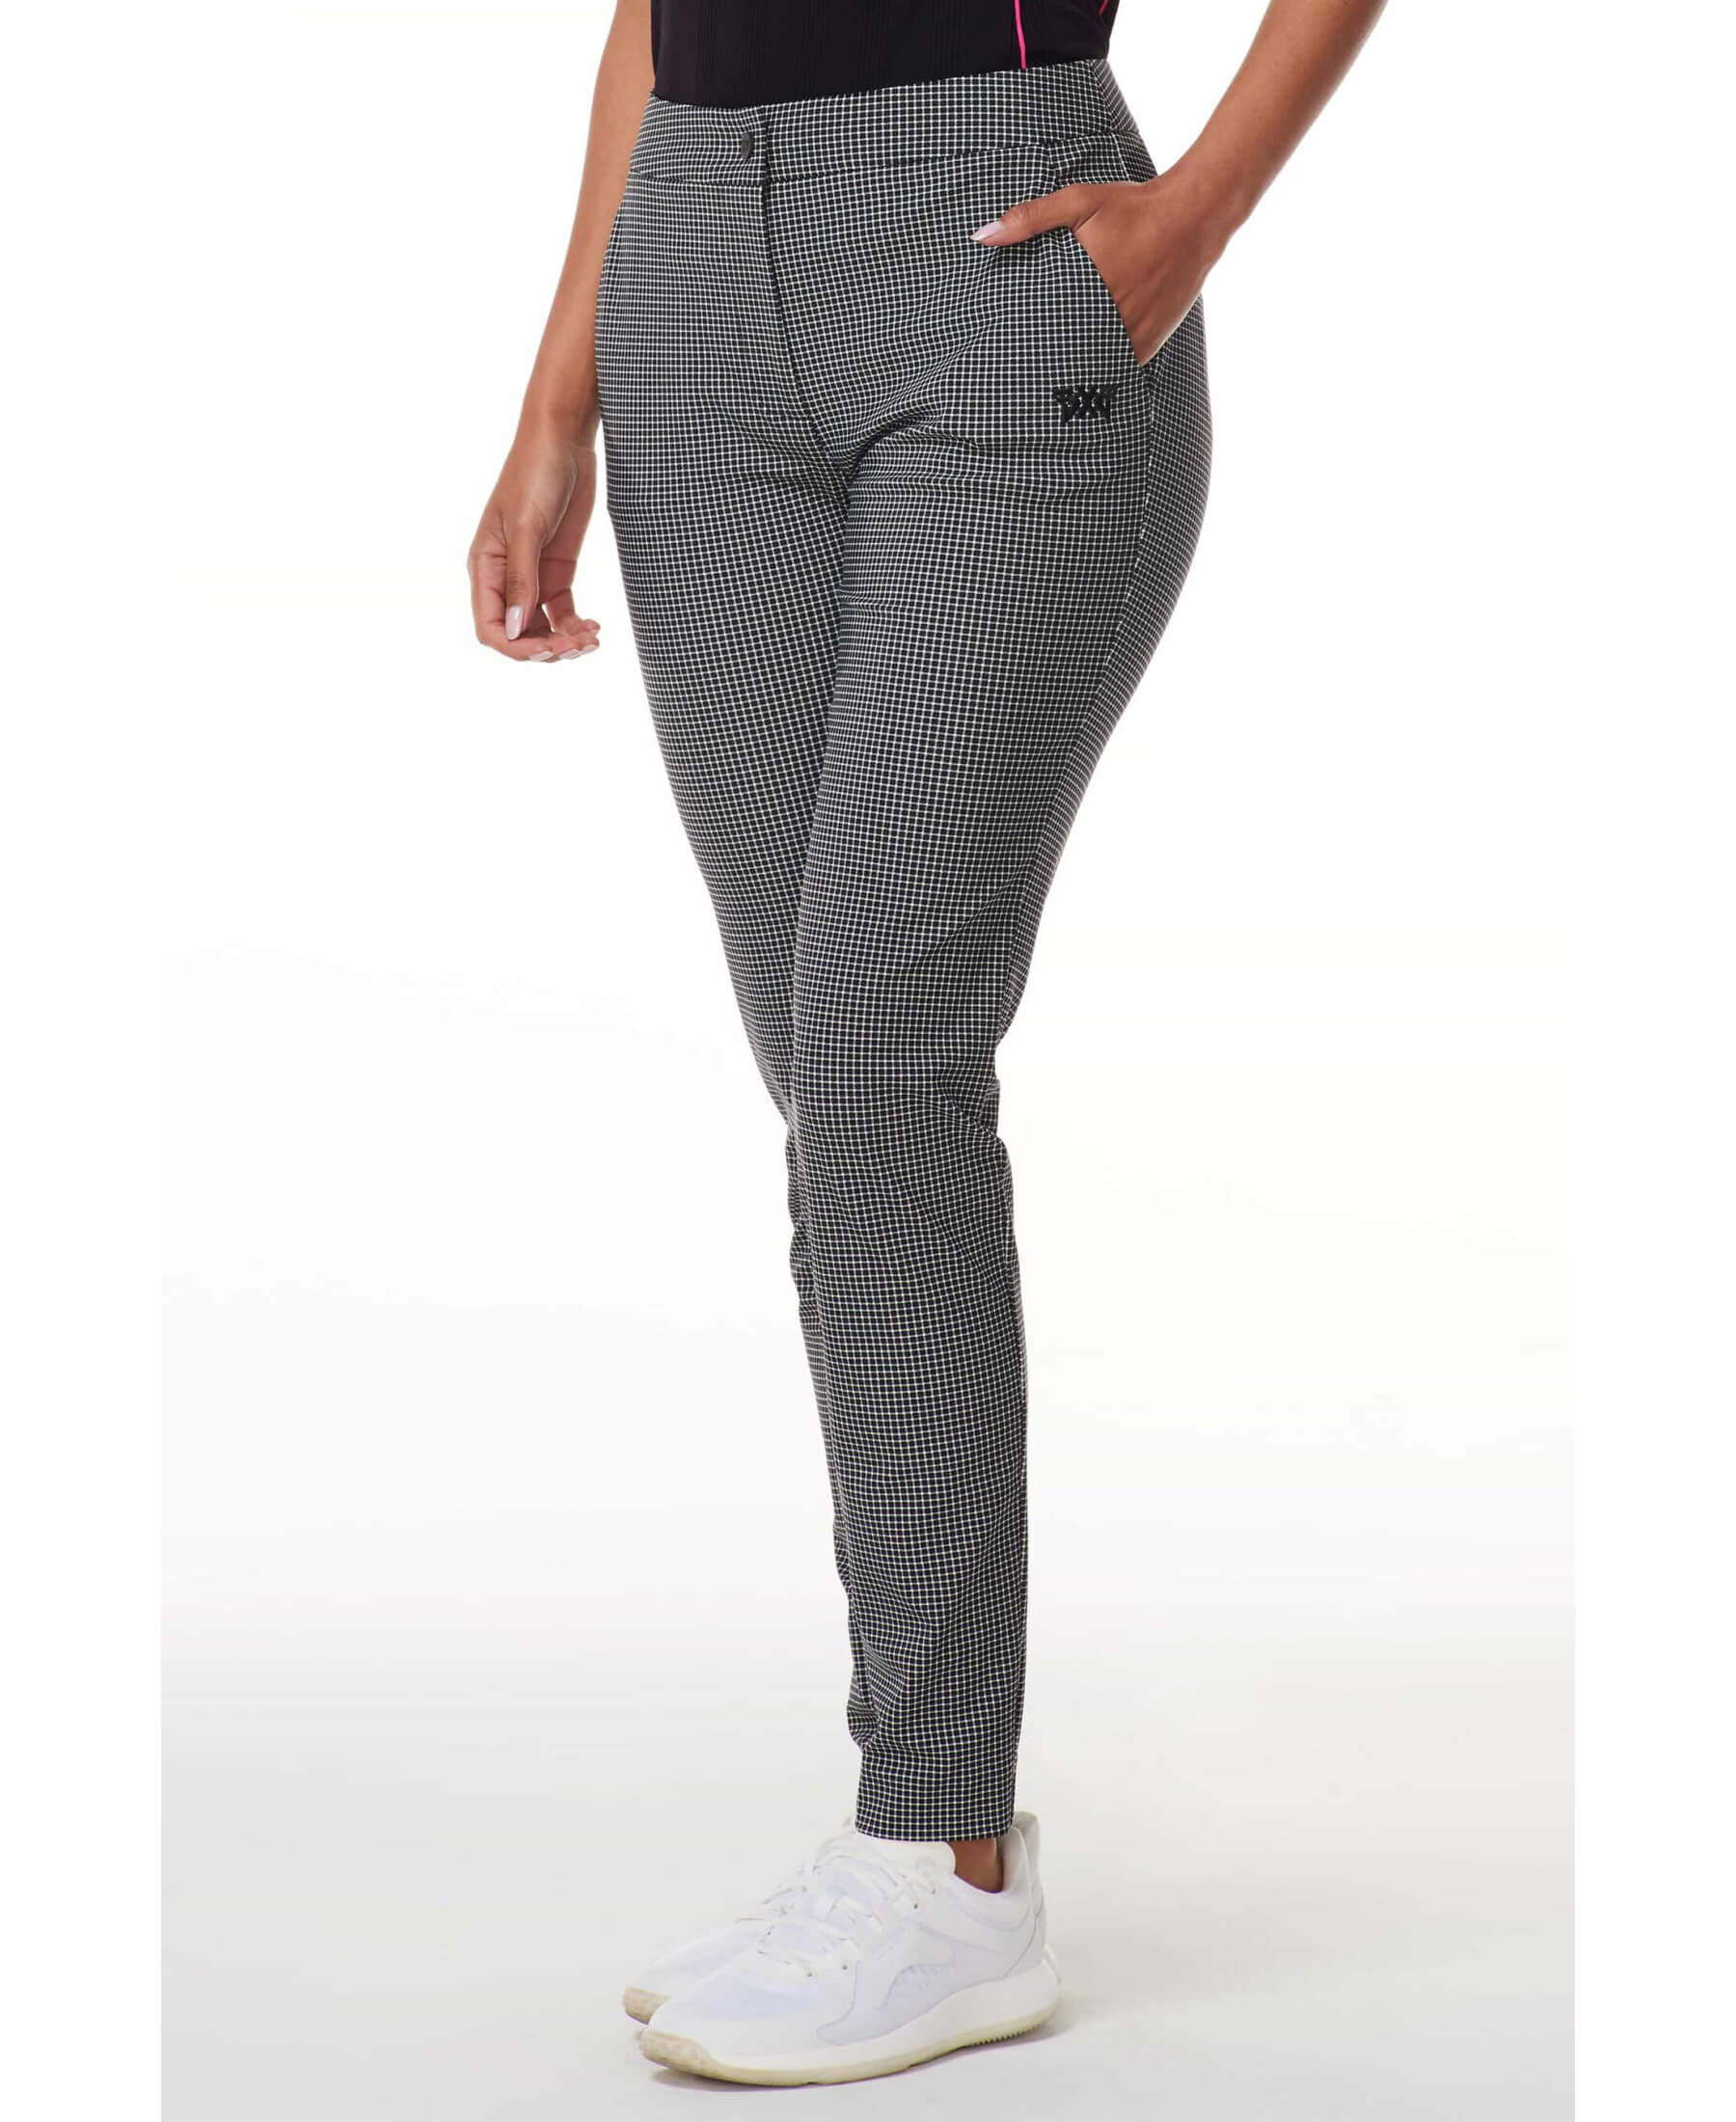 Kingston Gray Plaid Slim Pants | Hype clothing, Plaid pants, Fashion pants